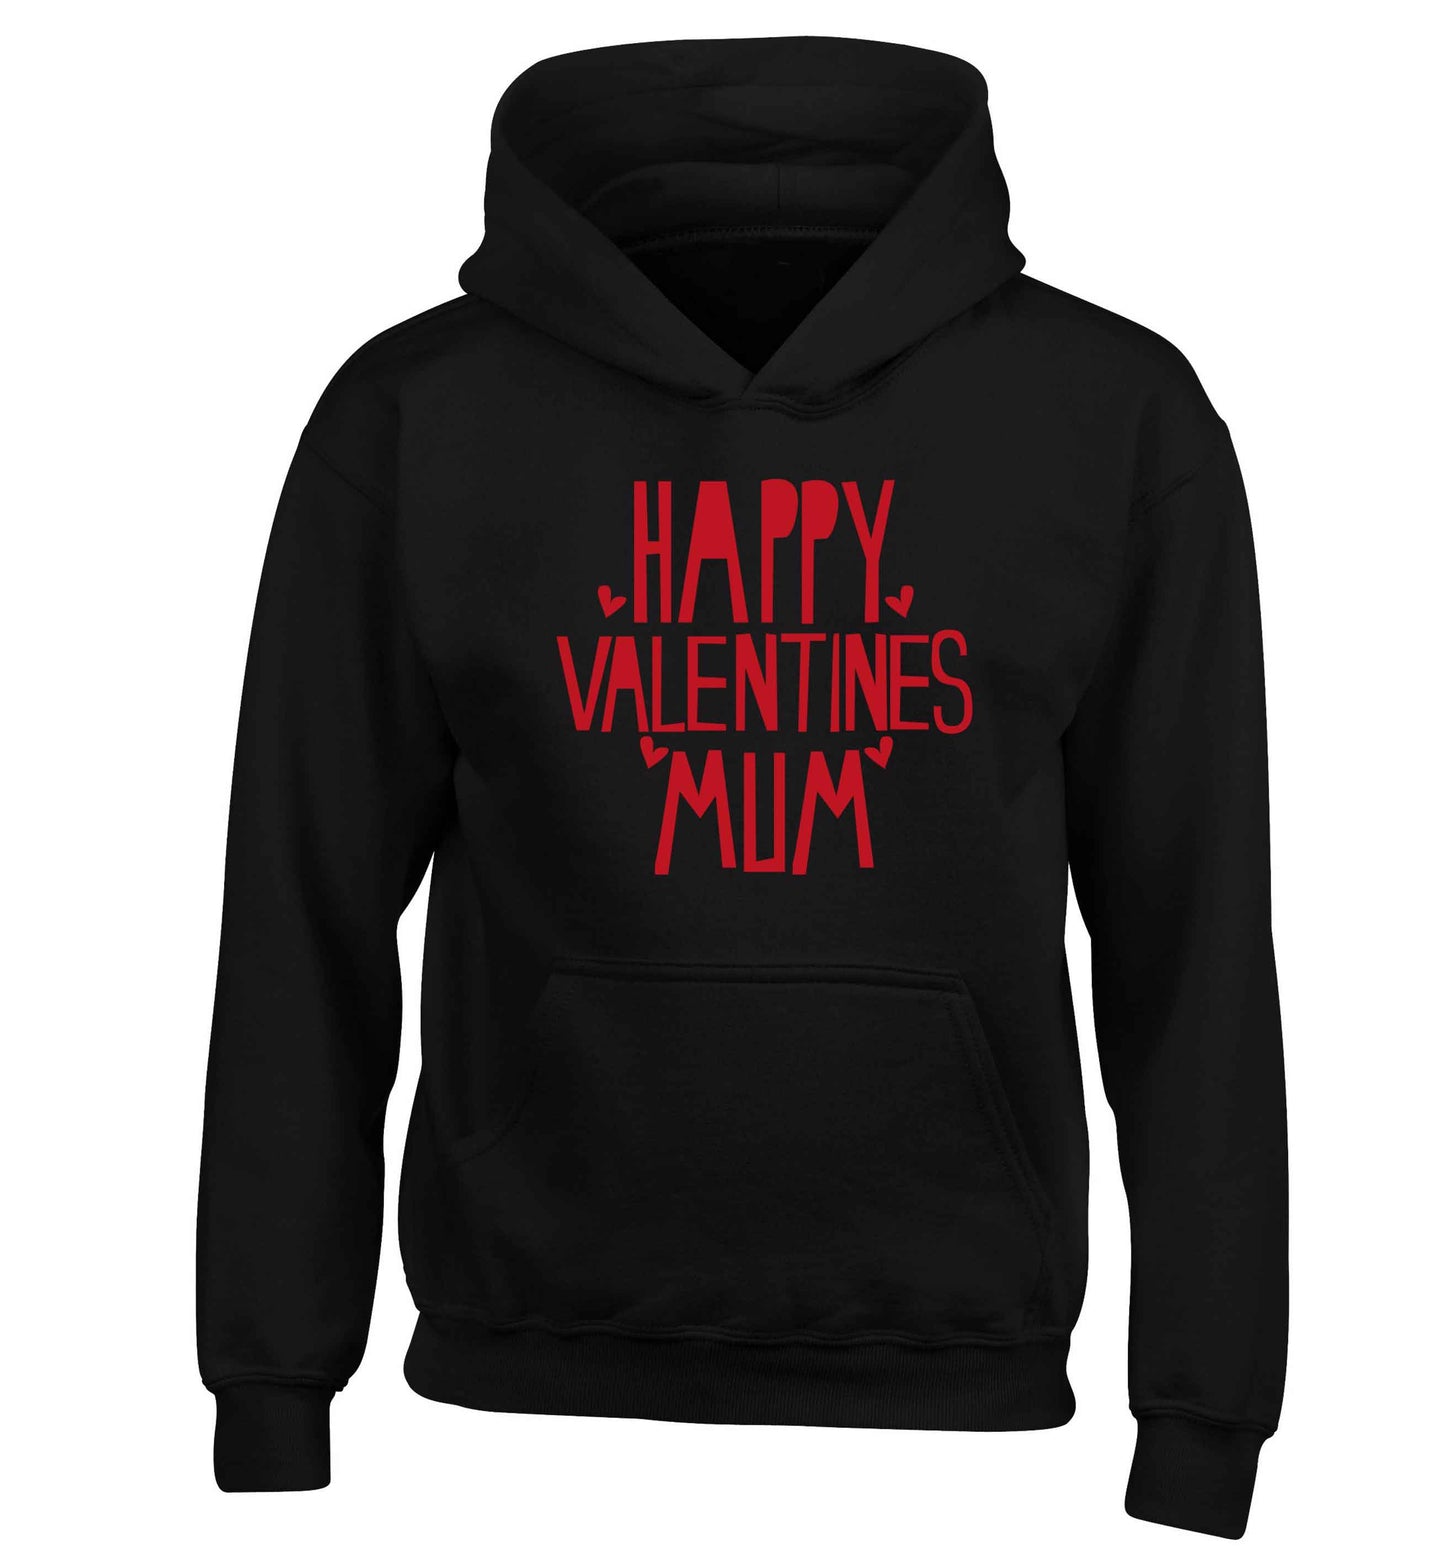 Happy valentines mum children's black hoodie 12-13 Years